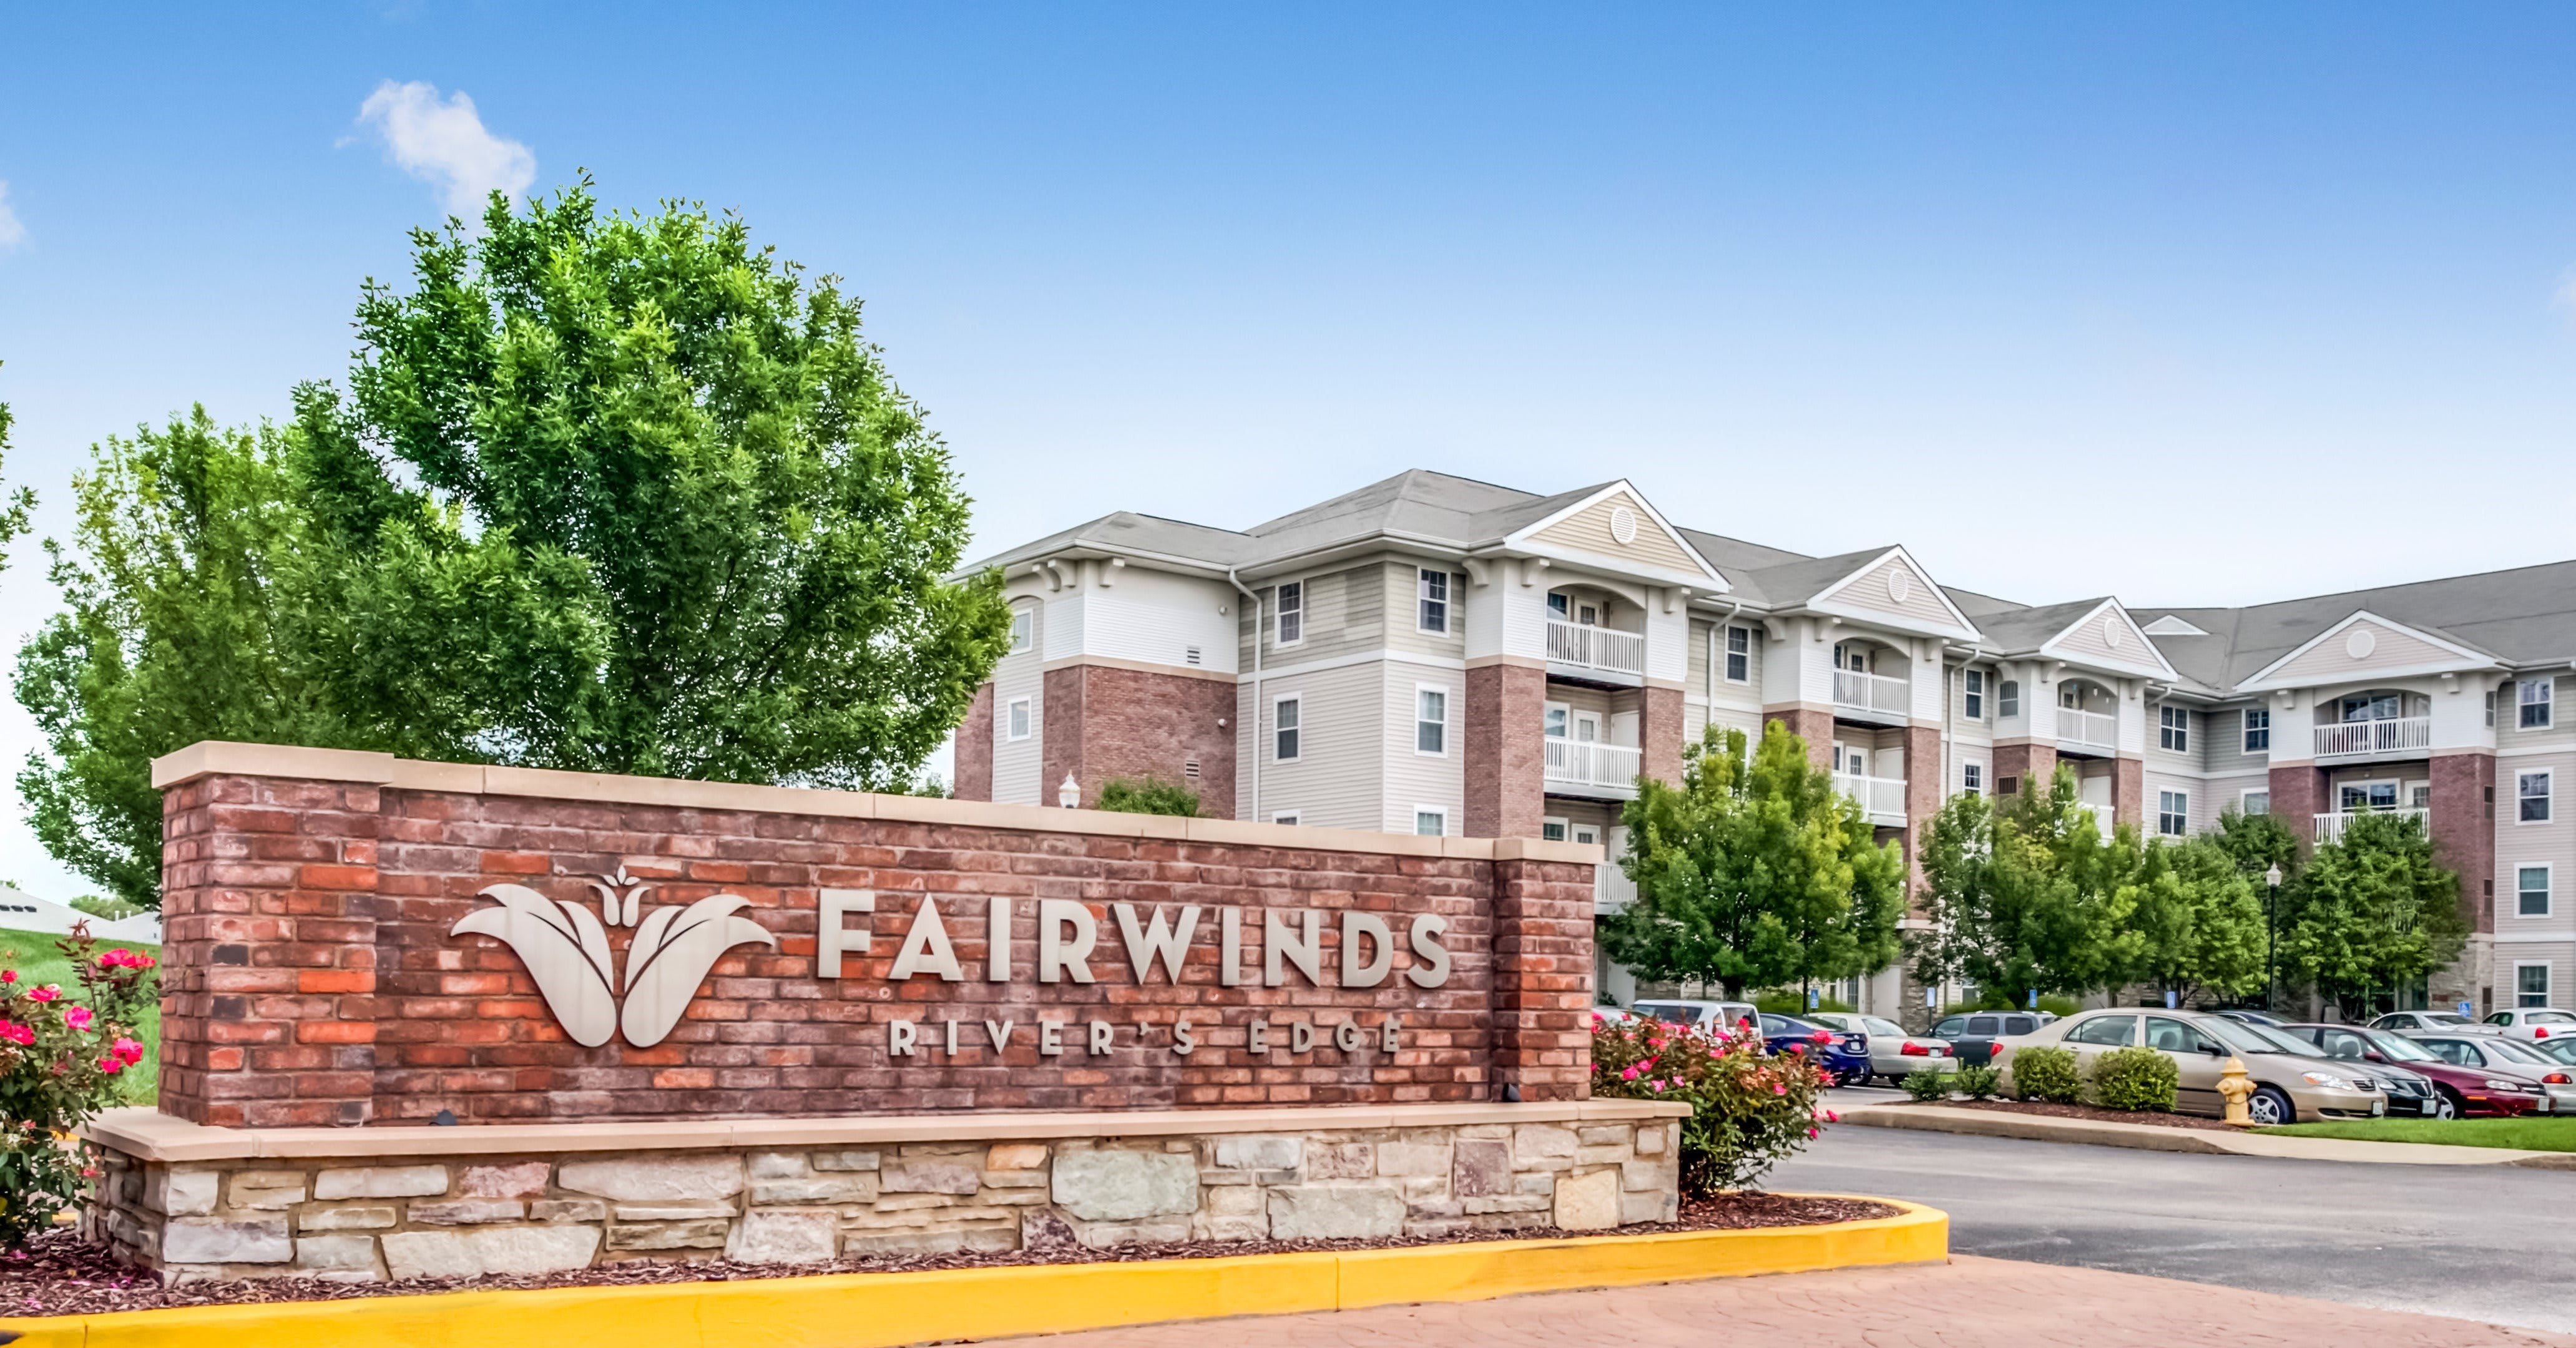 Fairwinds - River's Edge community exterior